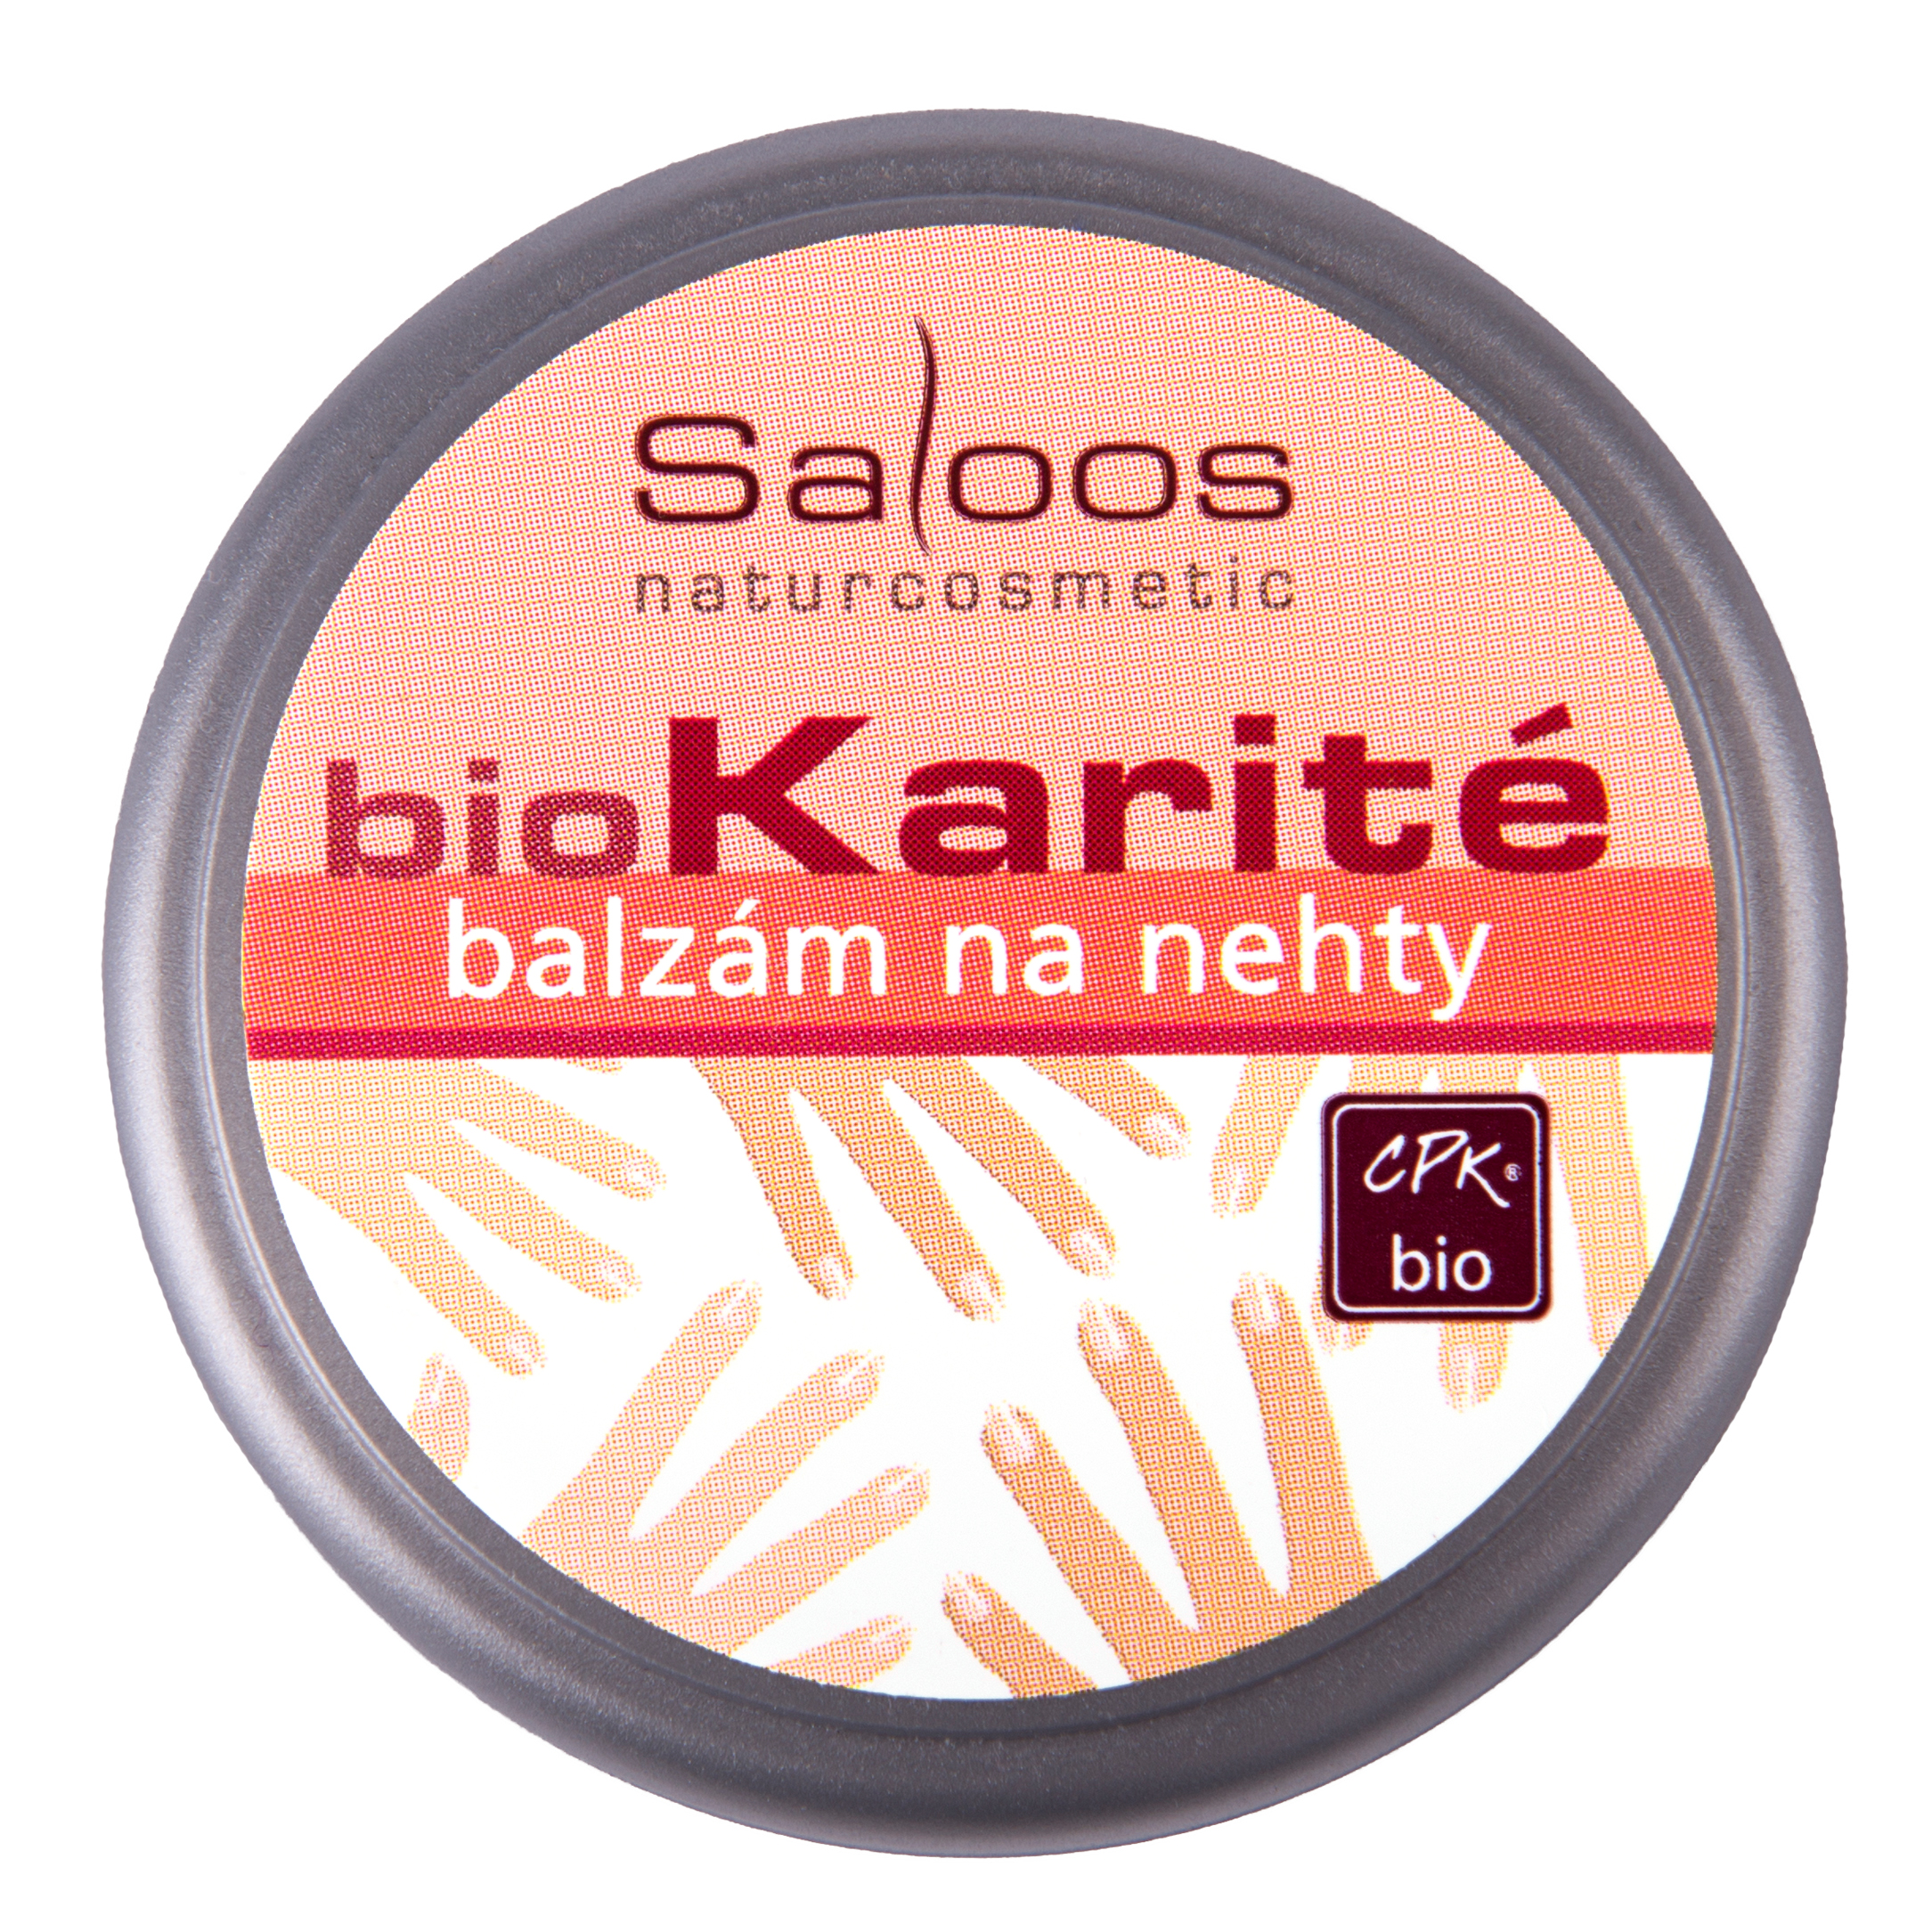 bio-karite-na-nehty-19ml-saloos